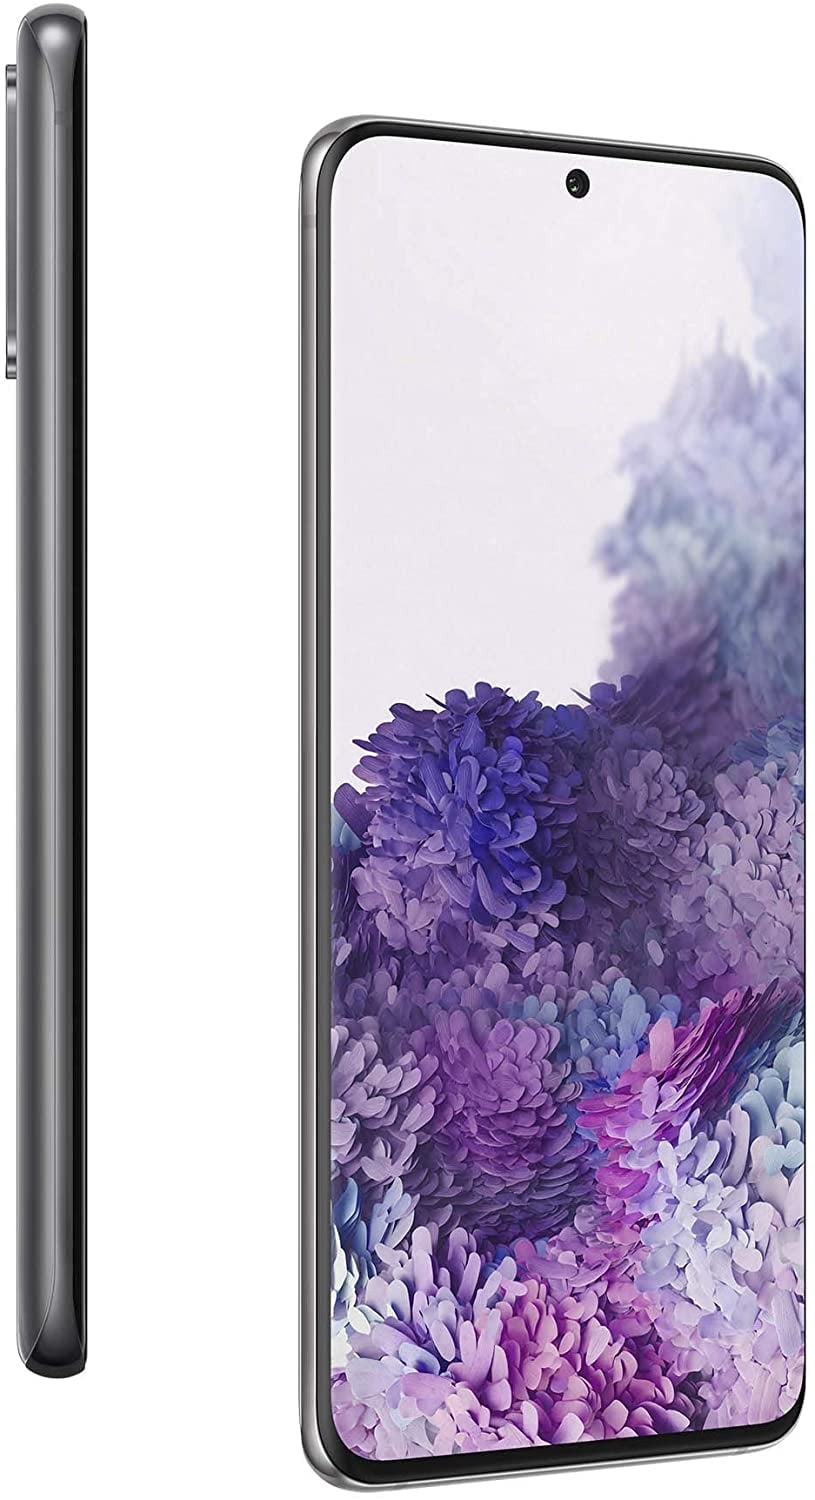 Samsung Galaxy S20 design